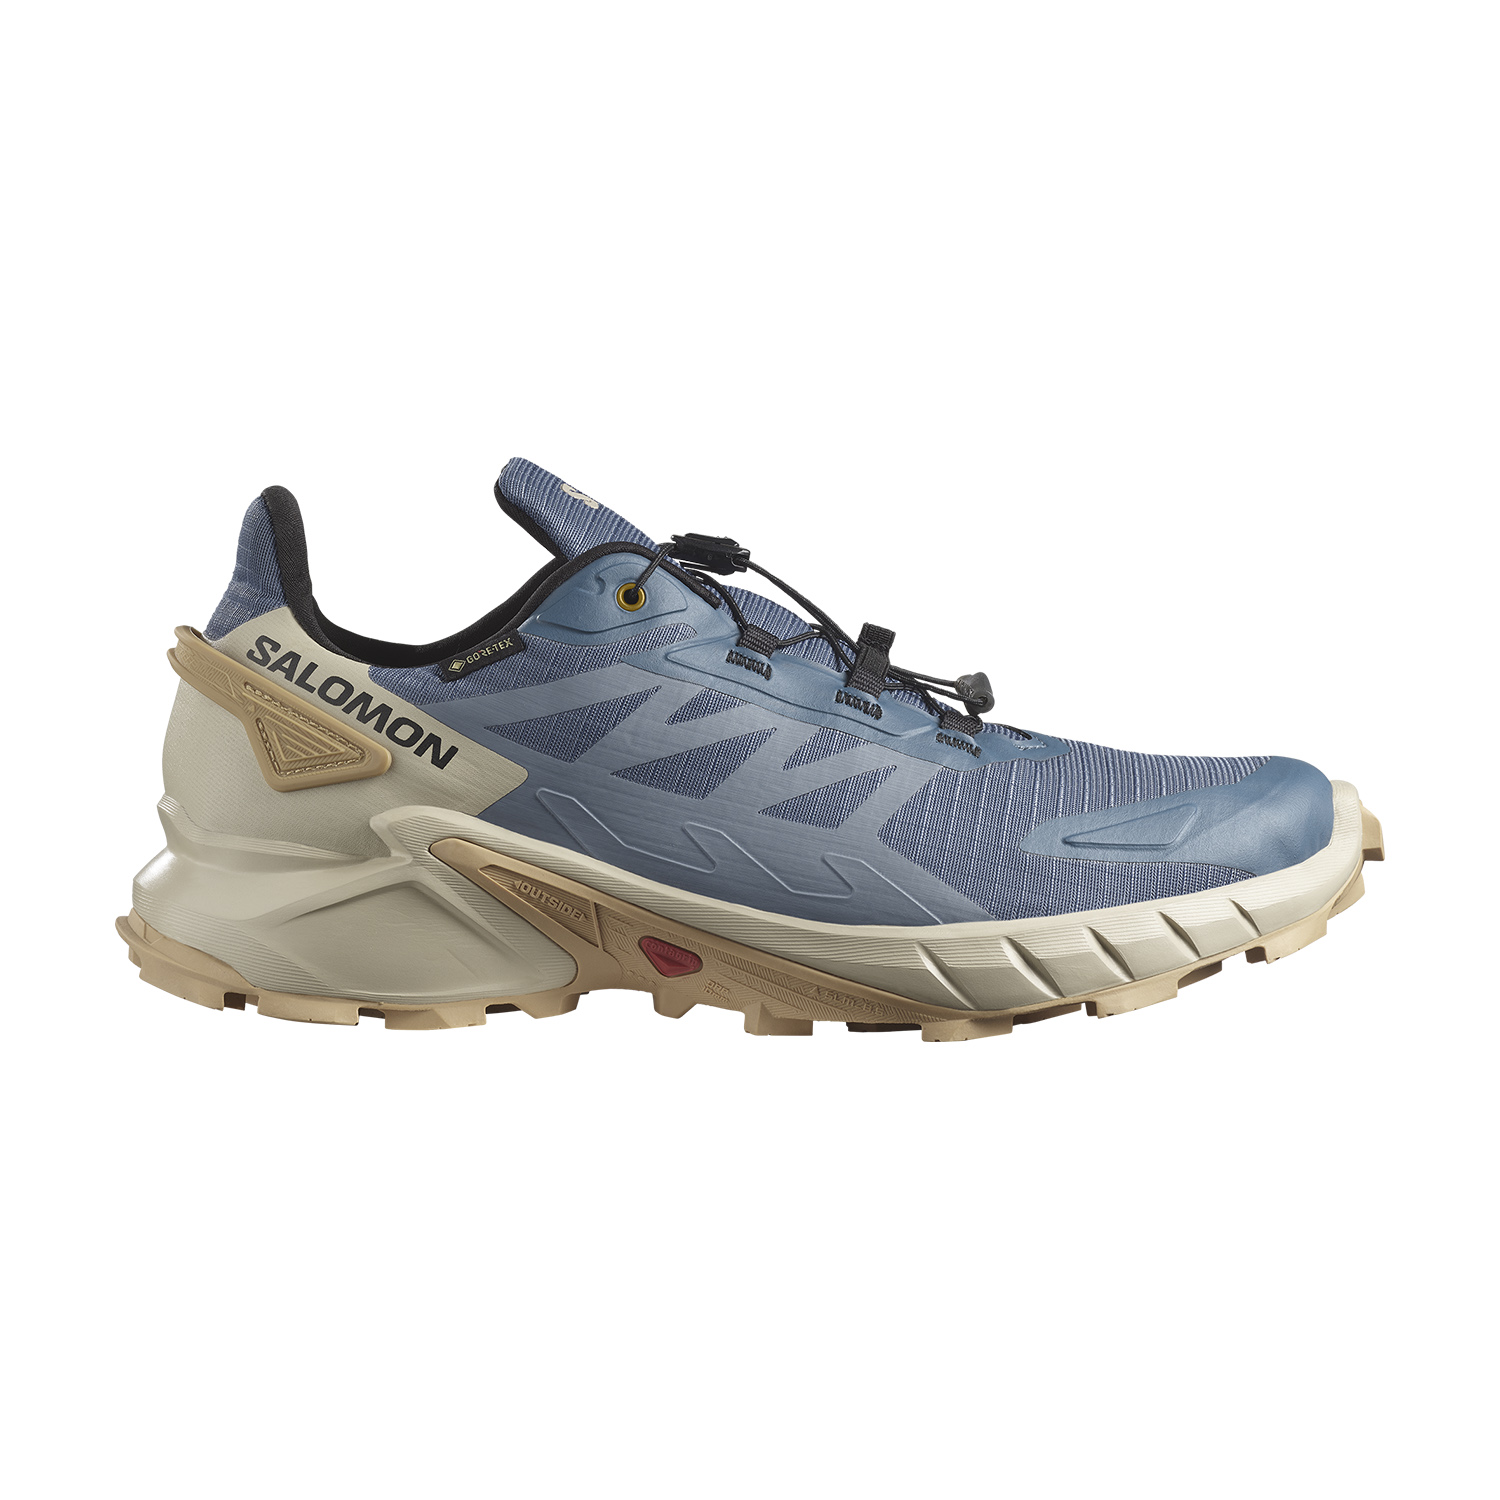 pause kapsel rotation Salomon Supercross 4 GTX Men's Trail Running Shoes - Bering Sea